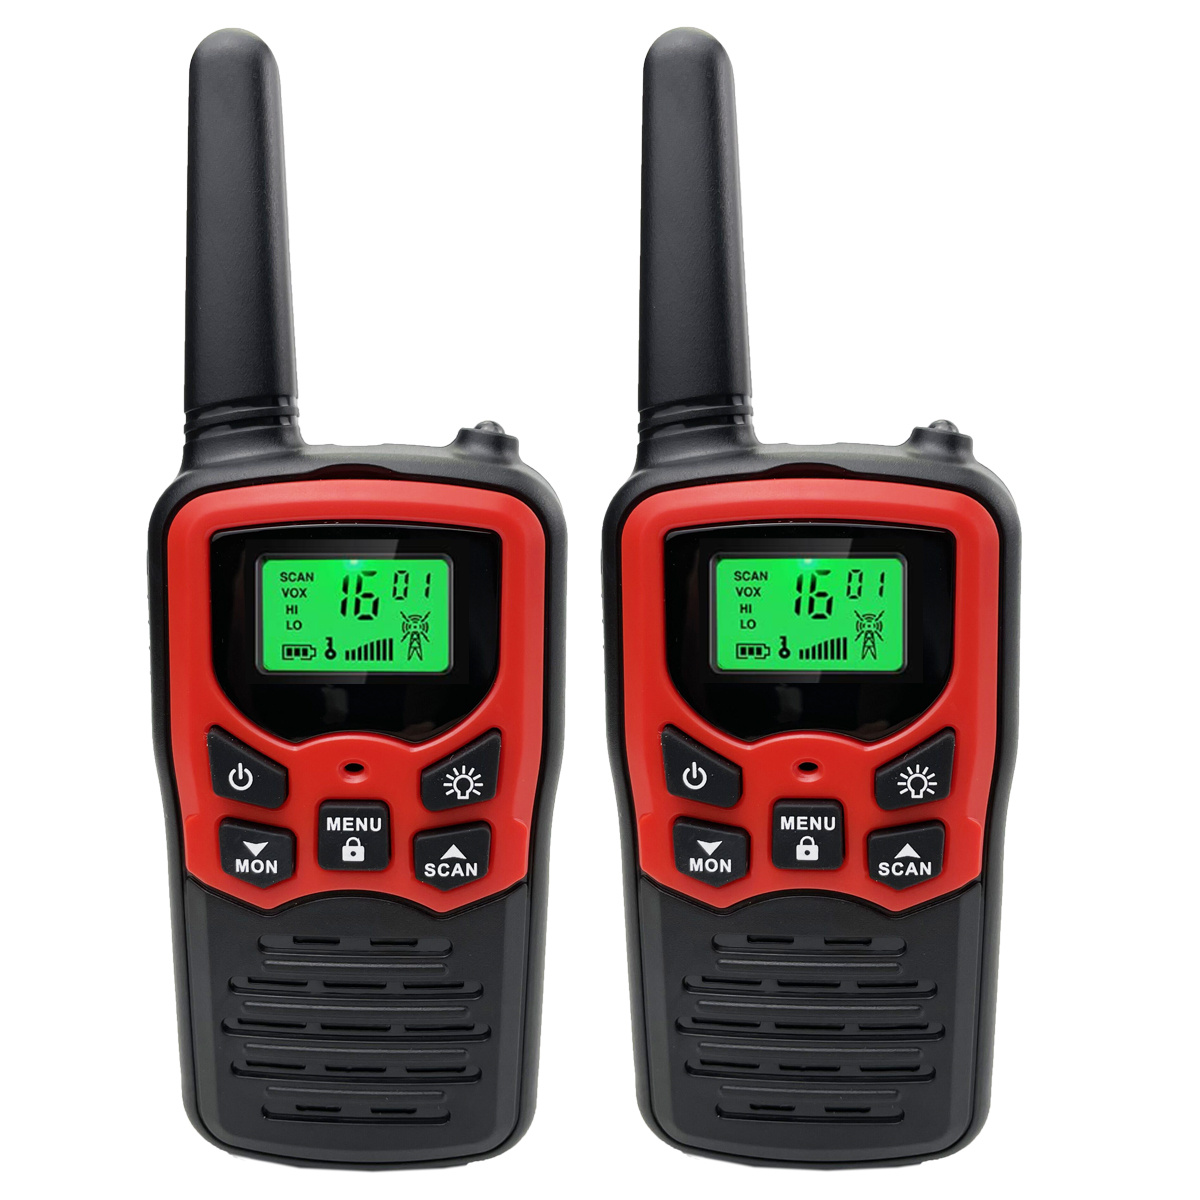 None gps/wireless Ver. Amateur Ham Radio 6 Bands 256ch Air - Temu